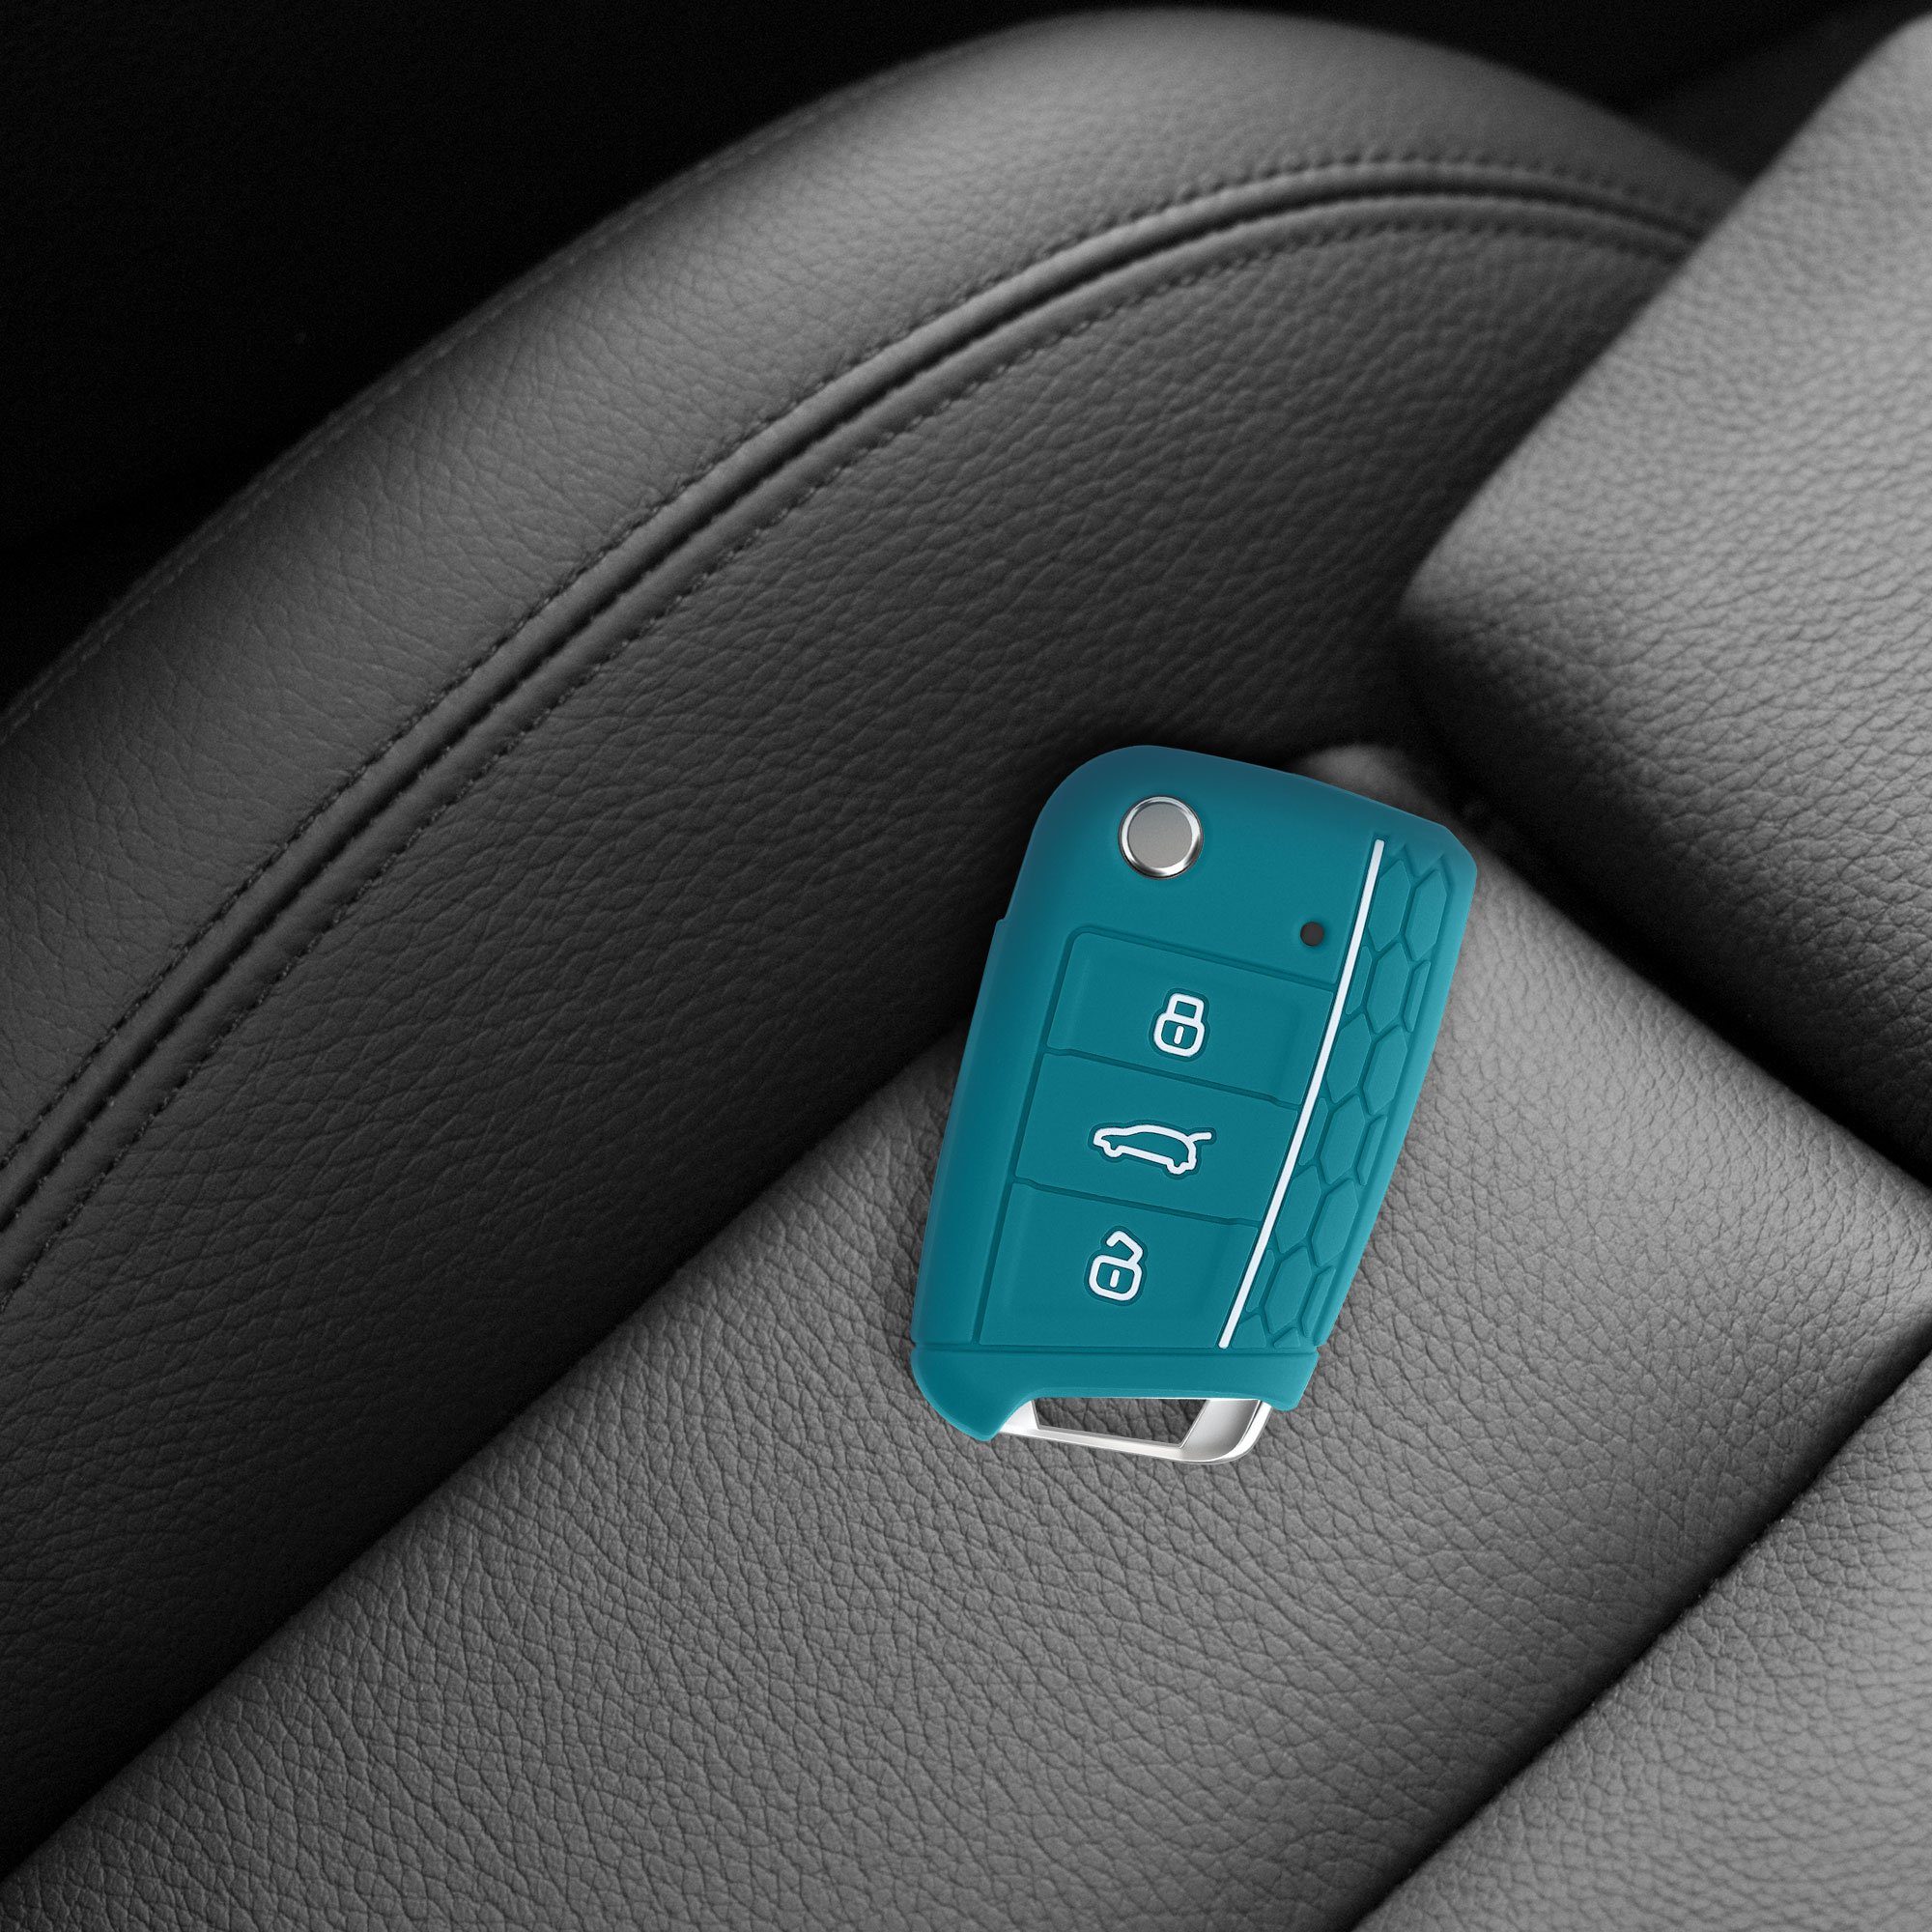 Hülle Golf für VW Silikon Schlüssel Petrol-Weiß kwmobile Autoschlüssel Schlüsselhülle 7 Schlüsseltasche MK7, Case Cover